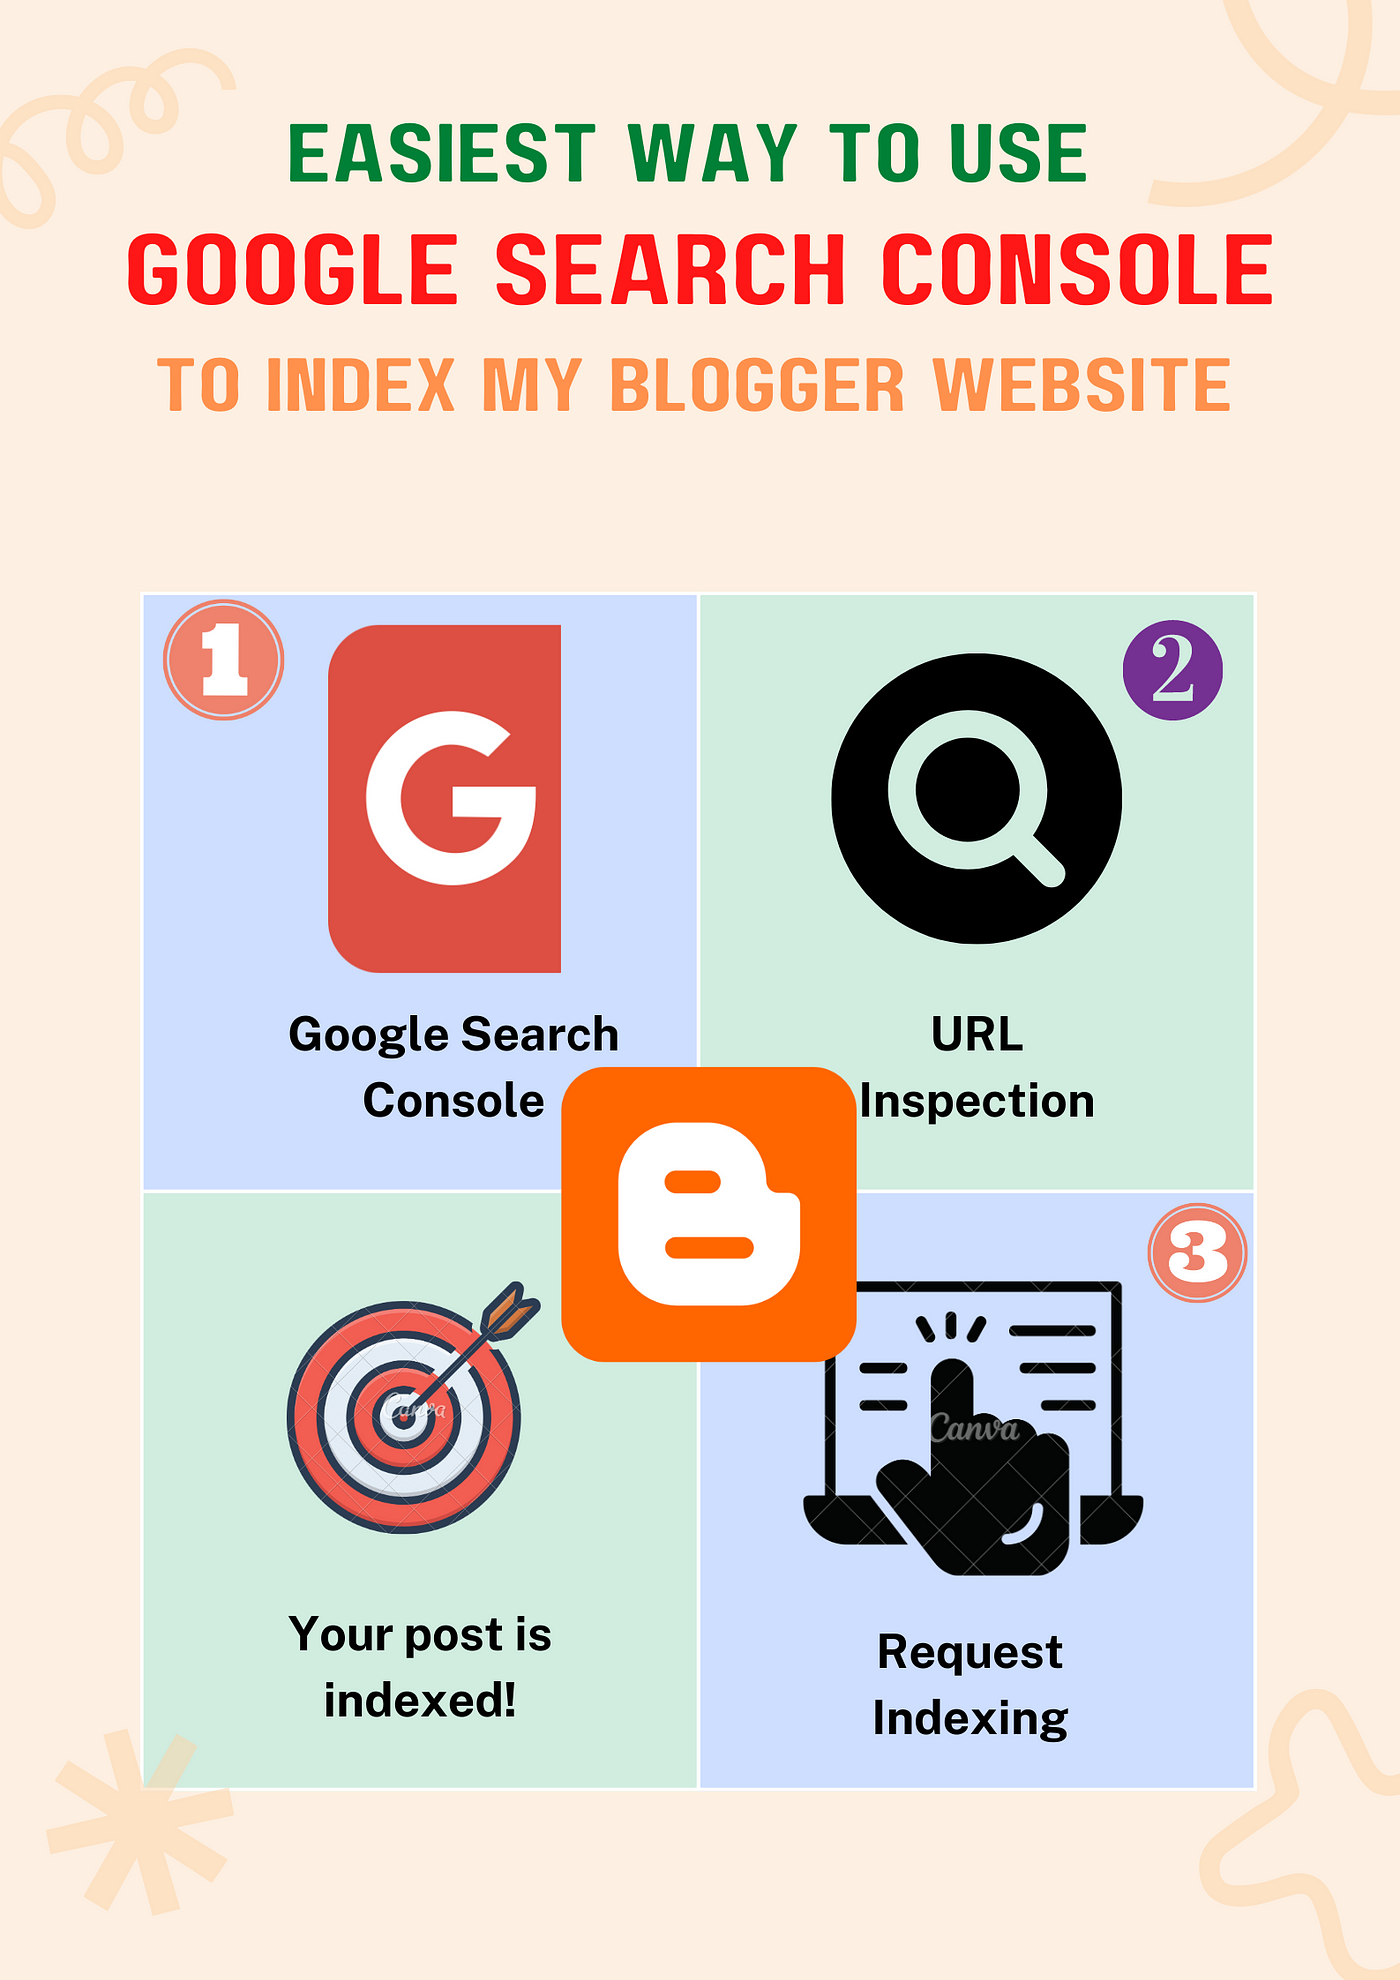 My Blog Website not index in Google । - Blogger Community